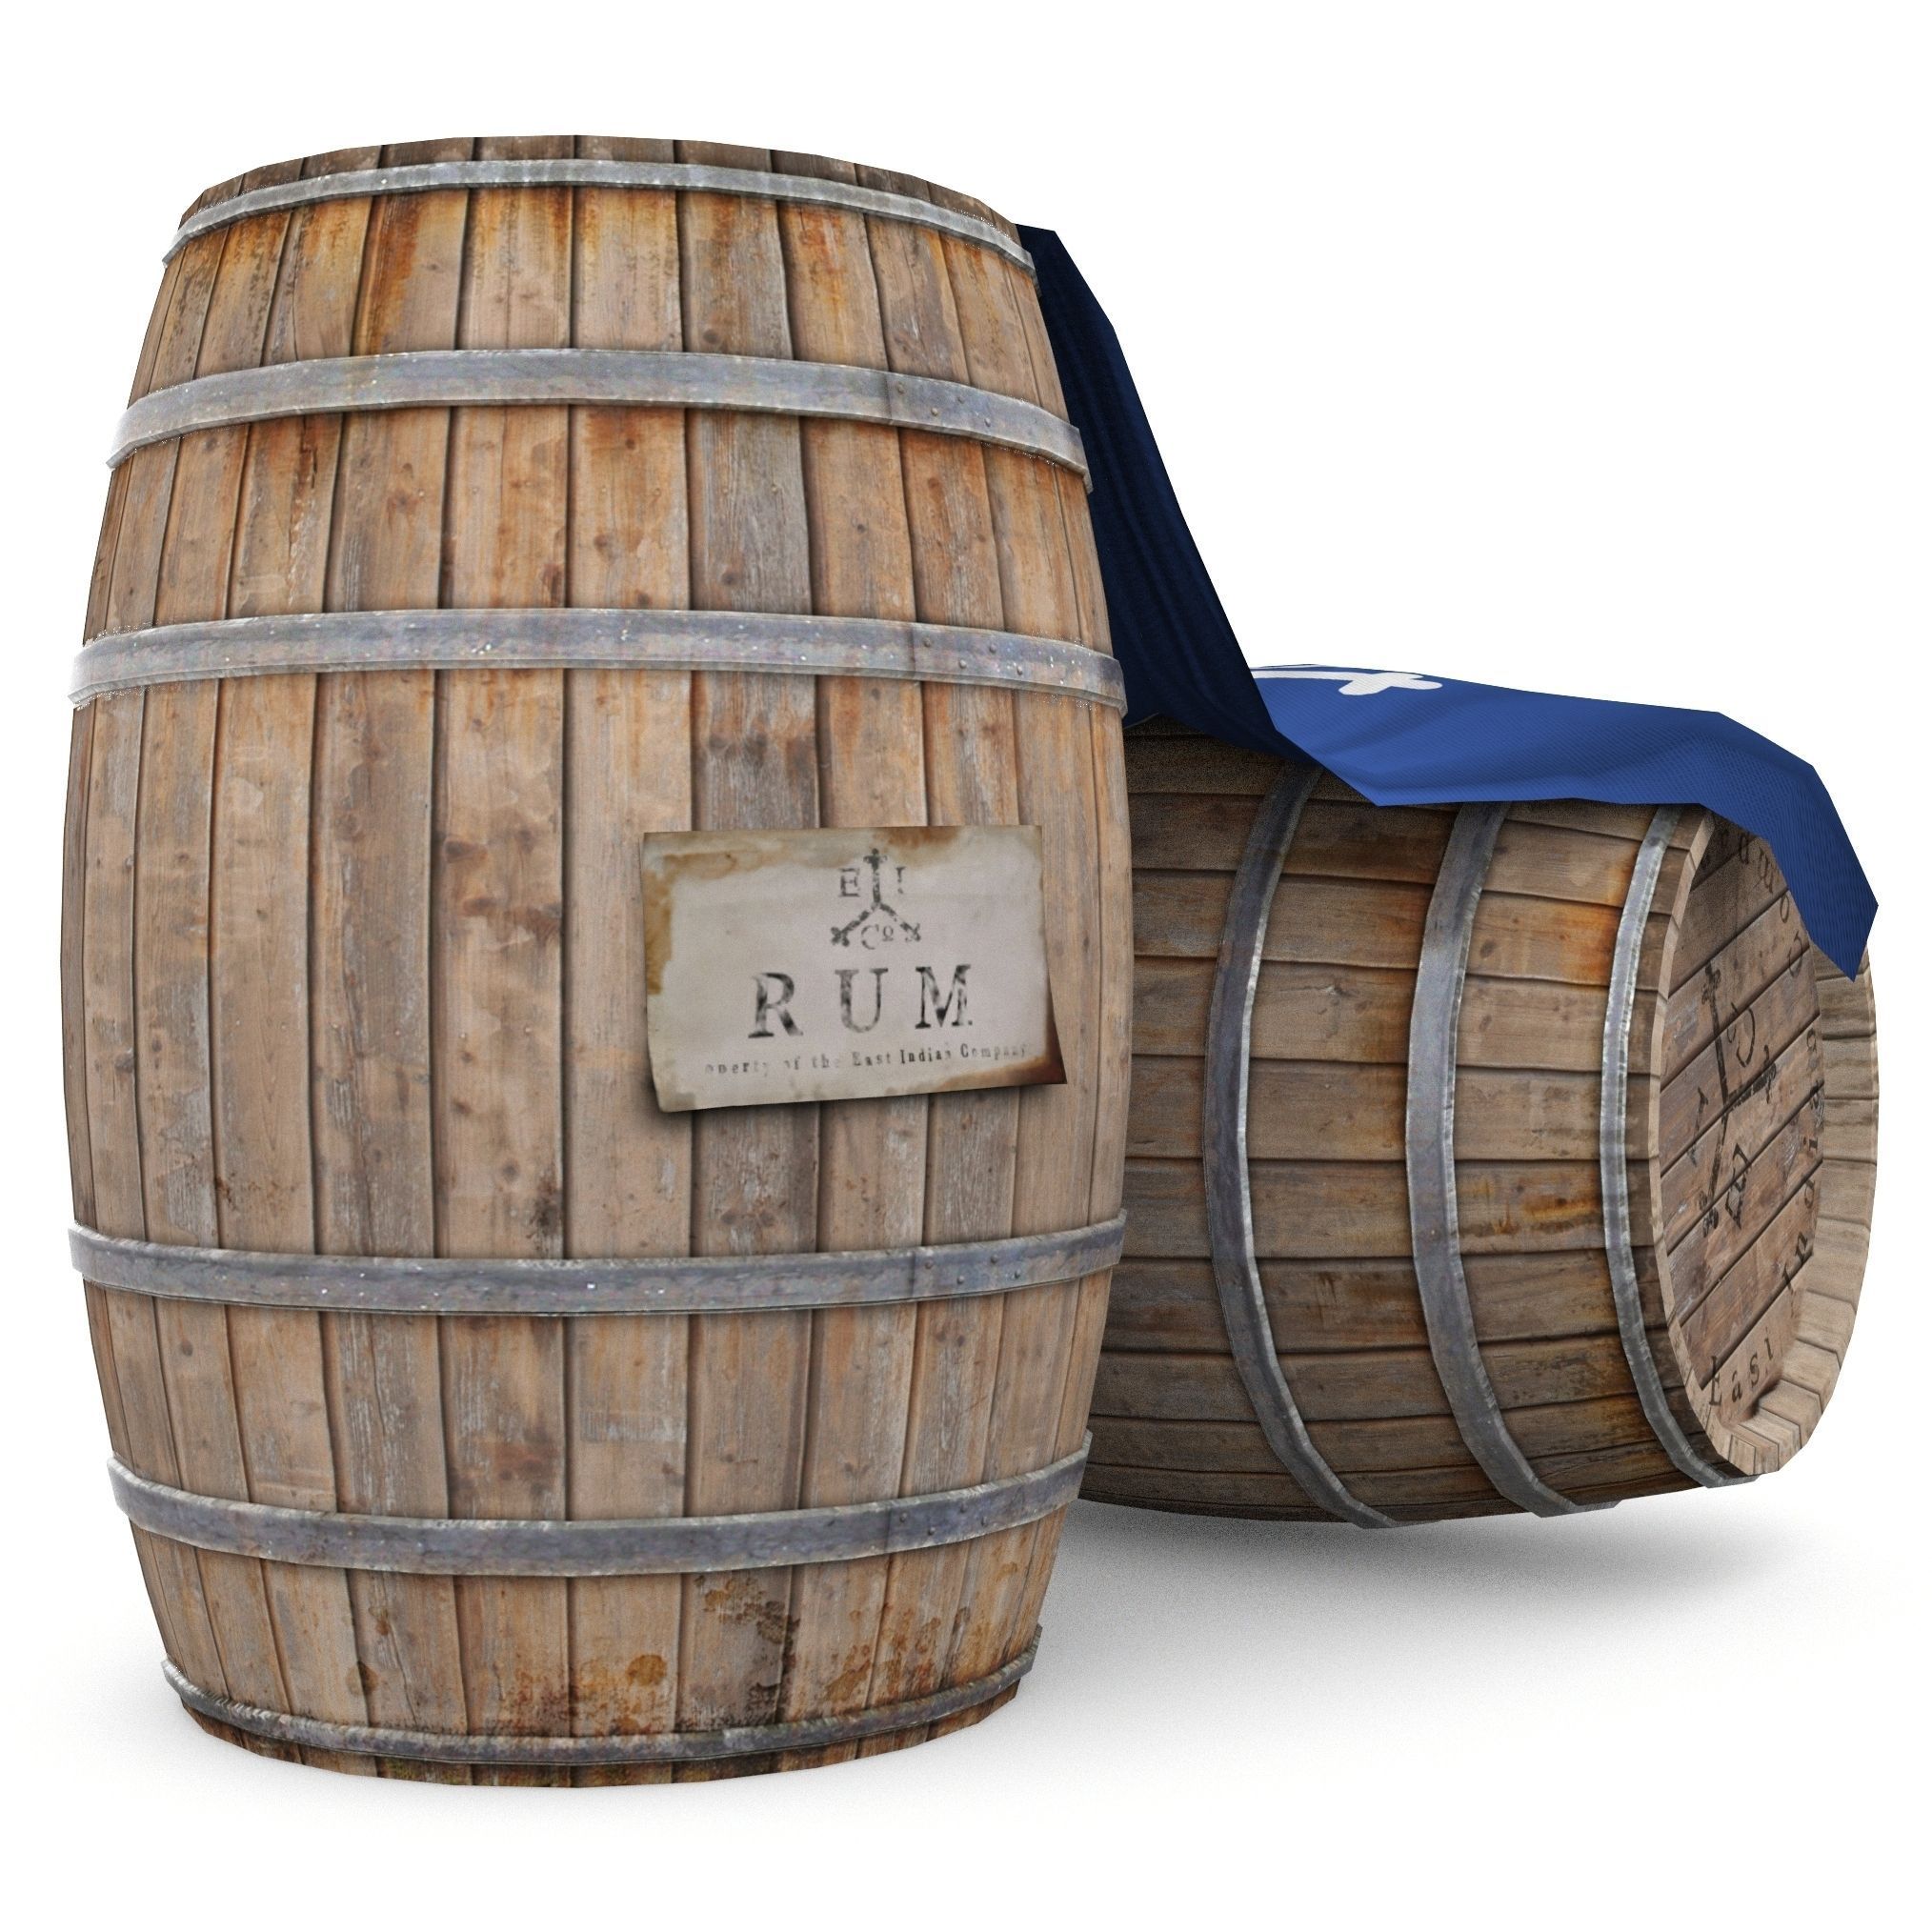 Rum wood barrels - East Indian Trading style 3D model OBJ 3DS FBX ...